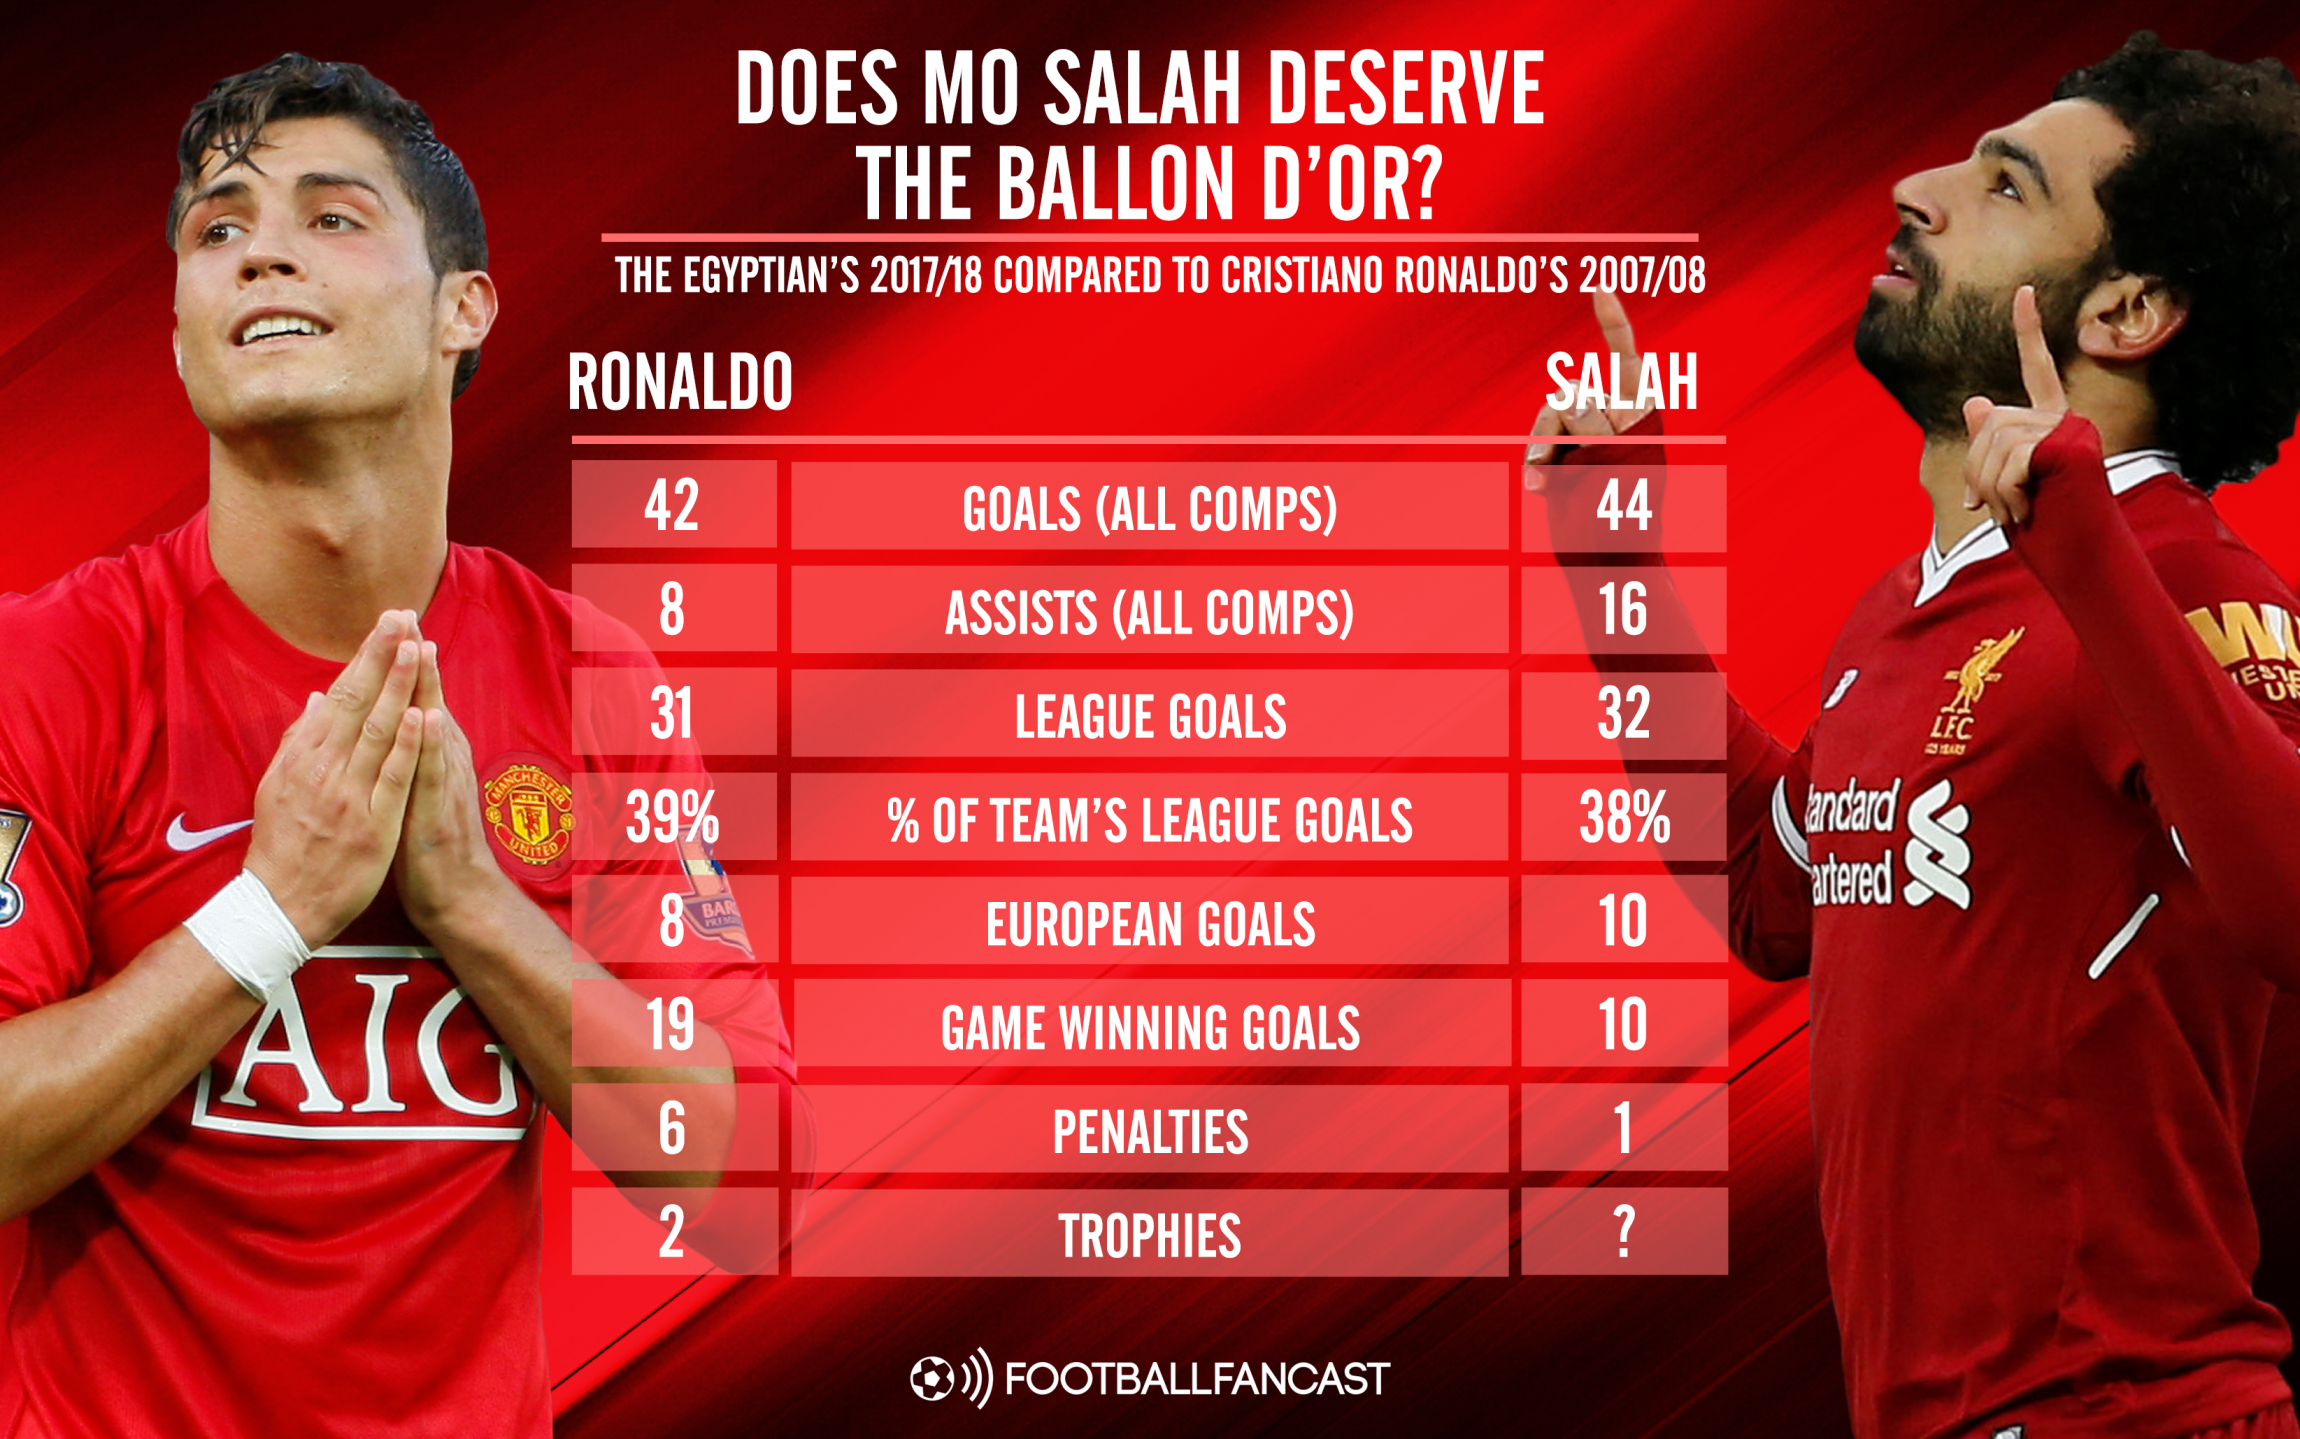 Mohamed Salah's season compared to Cristiano Ronaldo's ten years ago